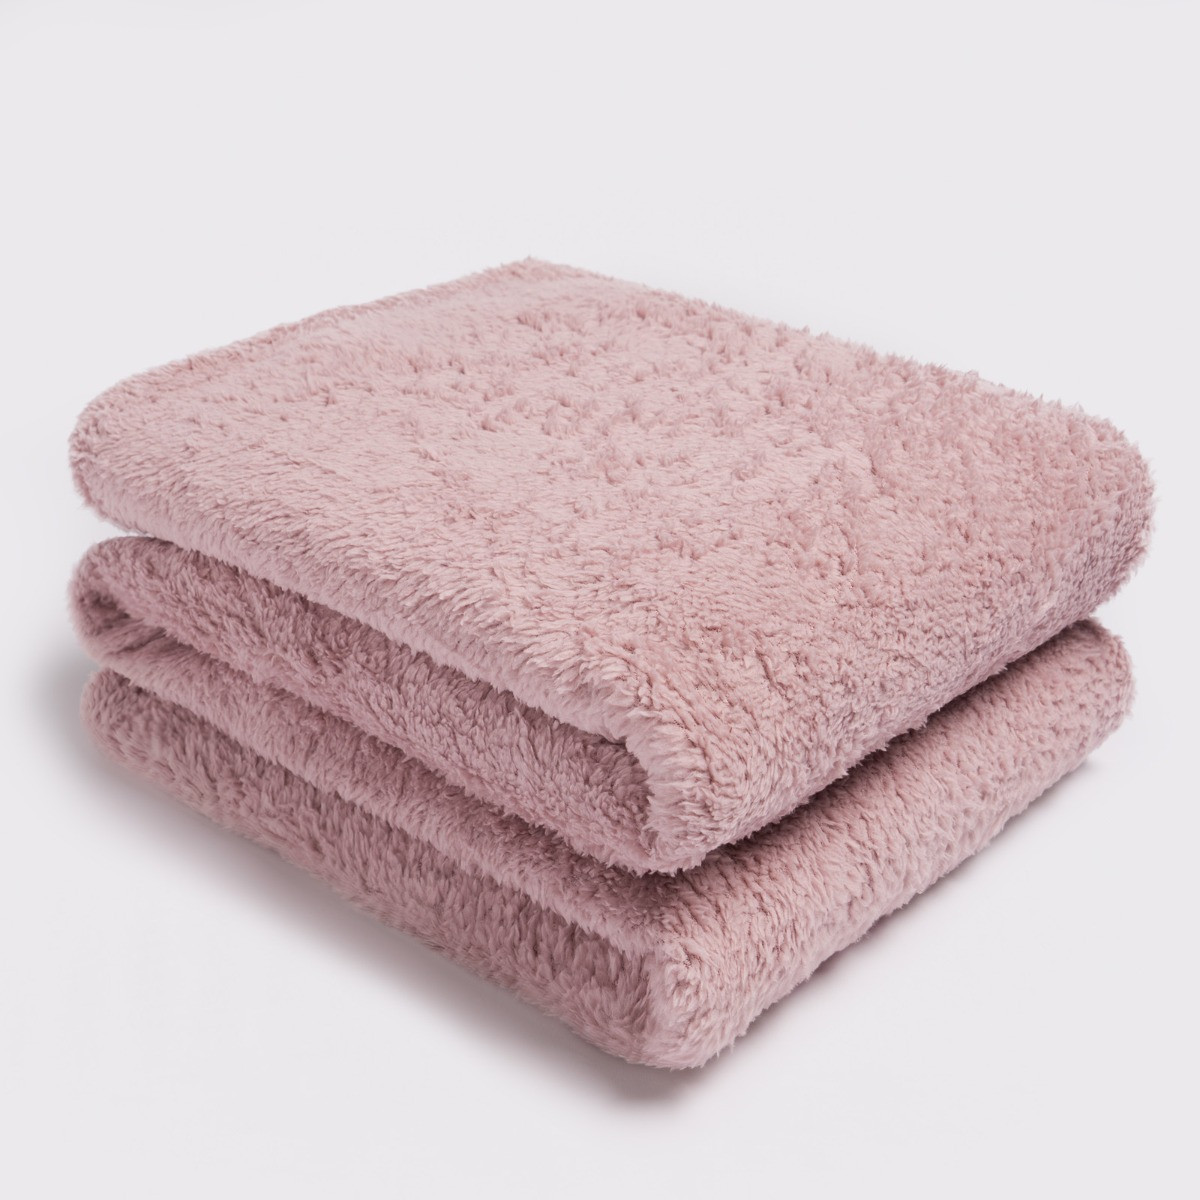 Brentfords Teddy Fleece Blanket Throw, Blush Pink - 150 x 200cm>